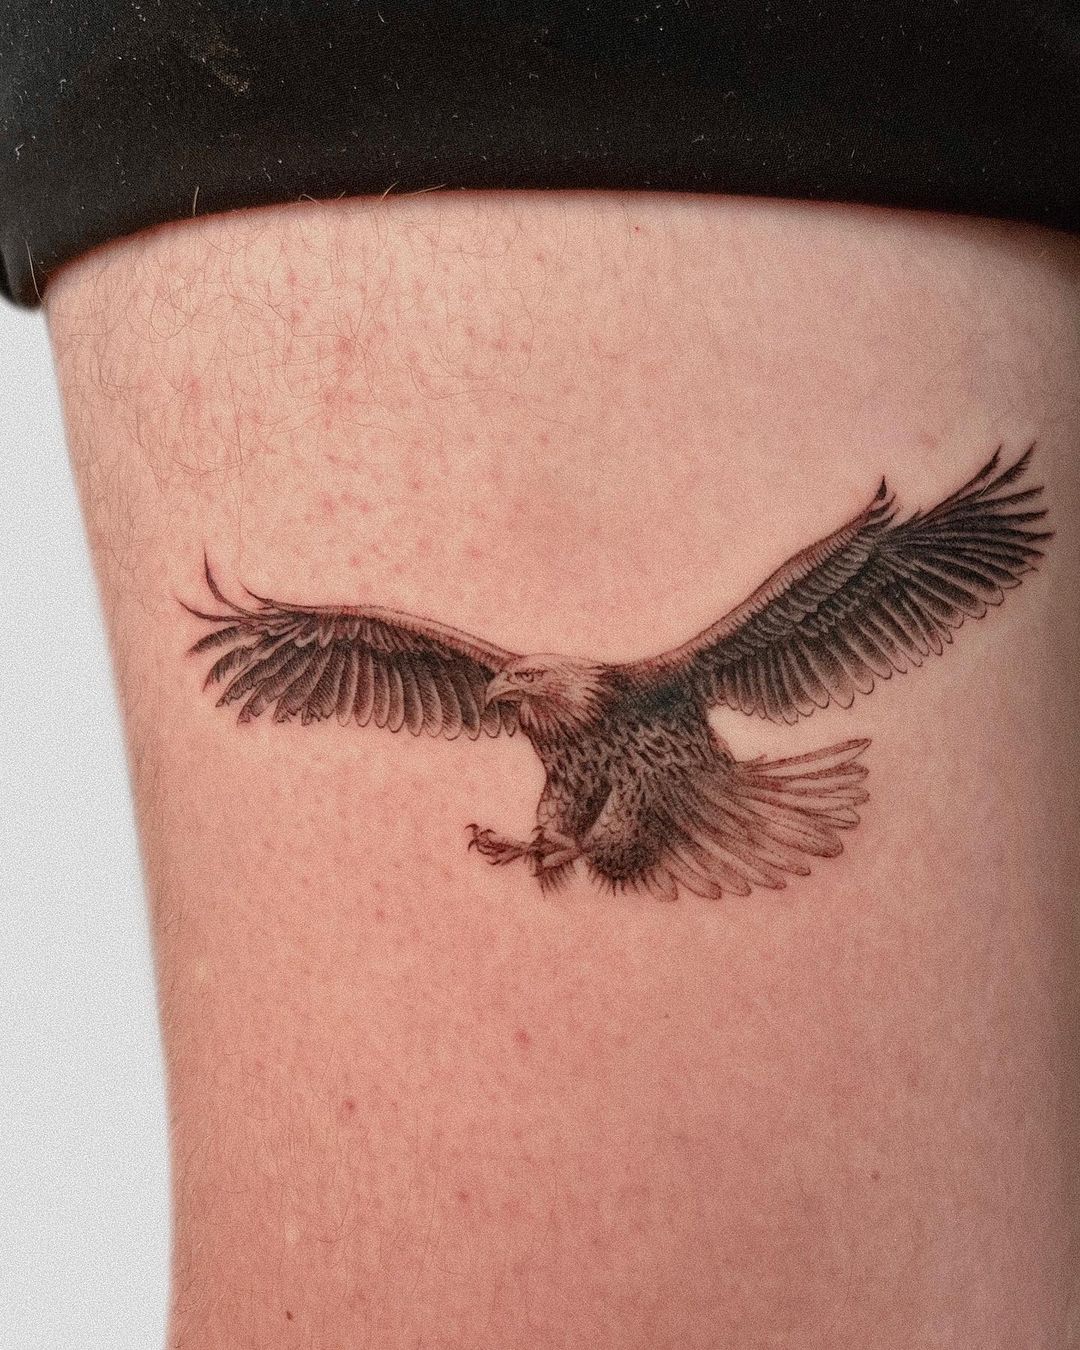 Eagle tattoo by morquecho.tattoo